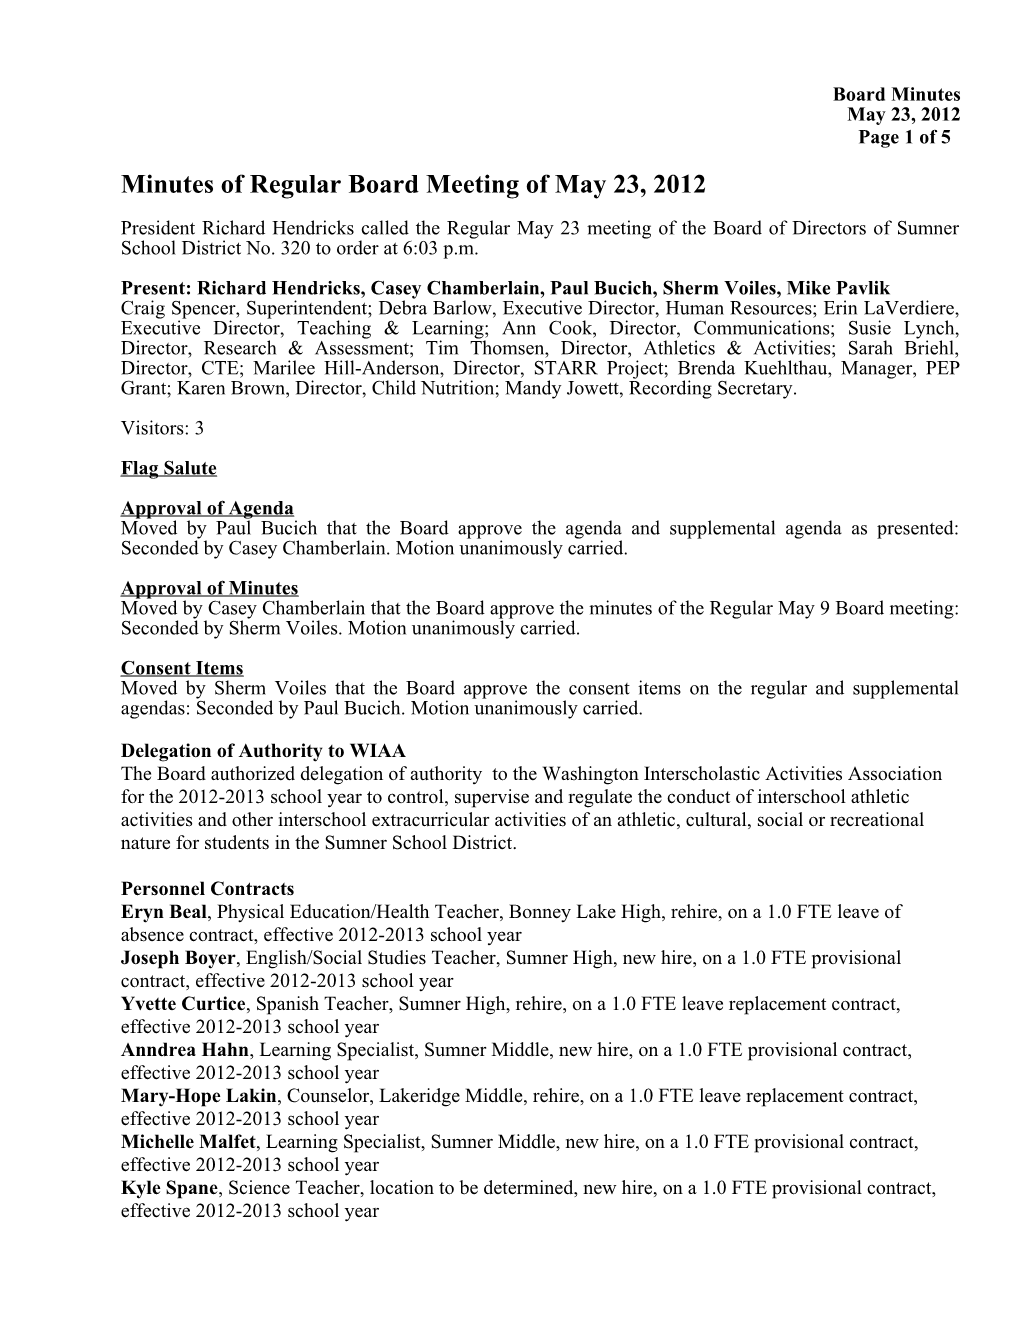 Minutes of Regular Board Meeting of May 23, 2012